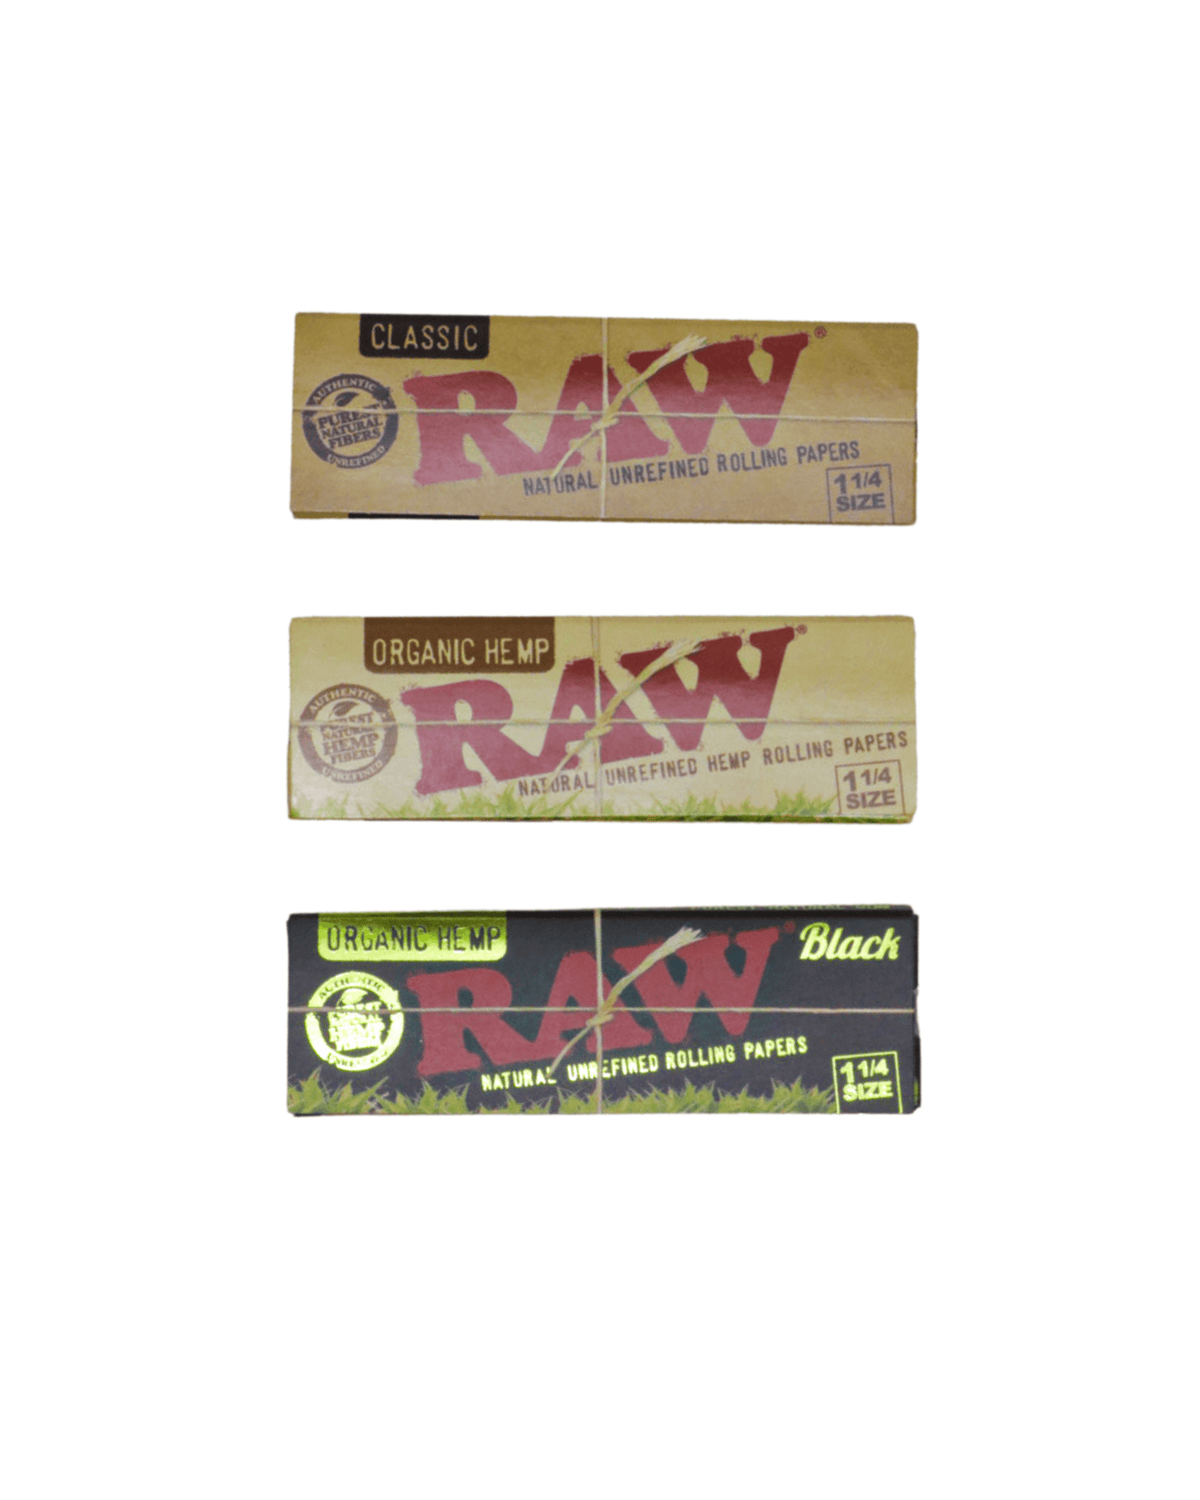 RAW Bundle Box RAW